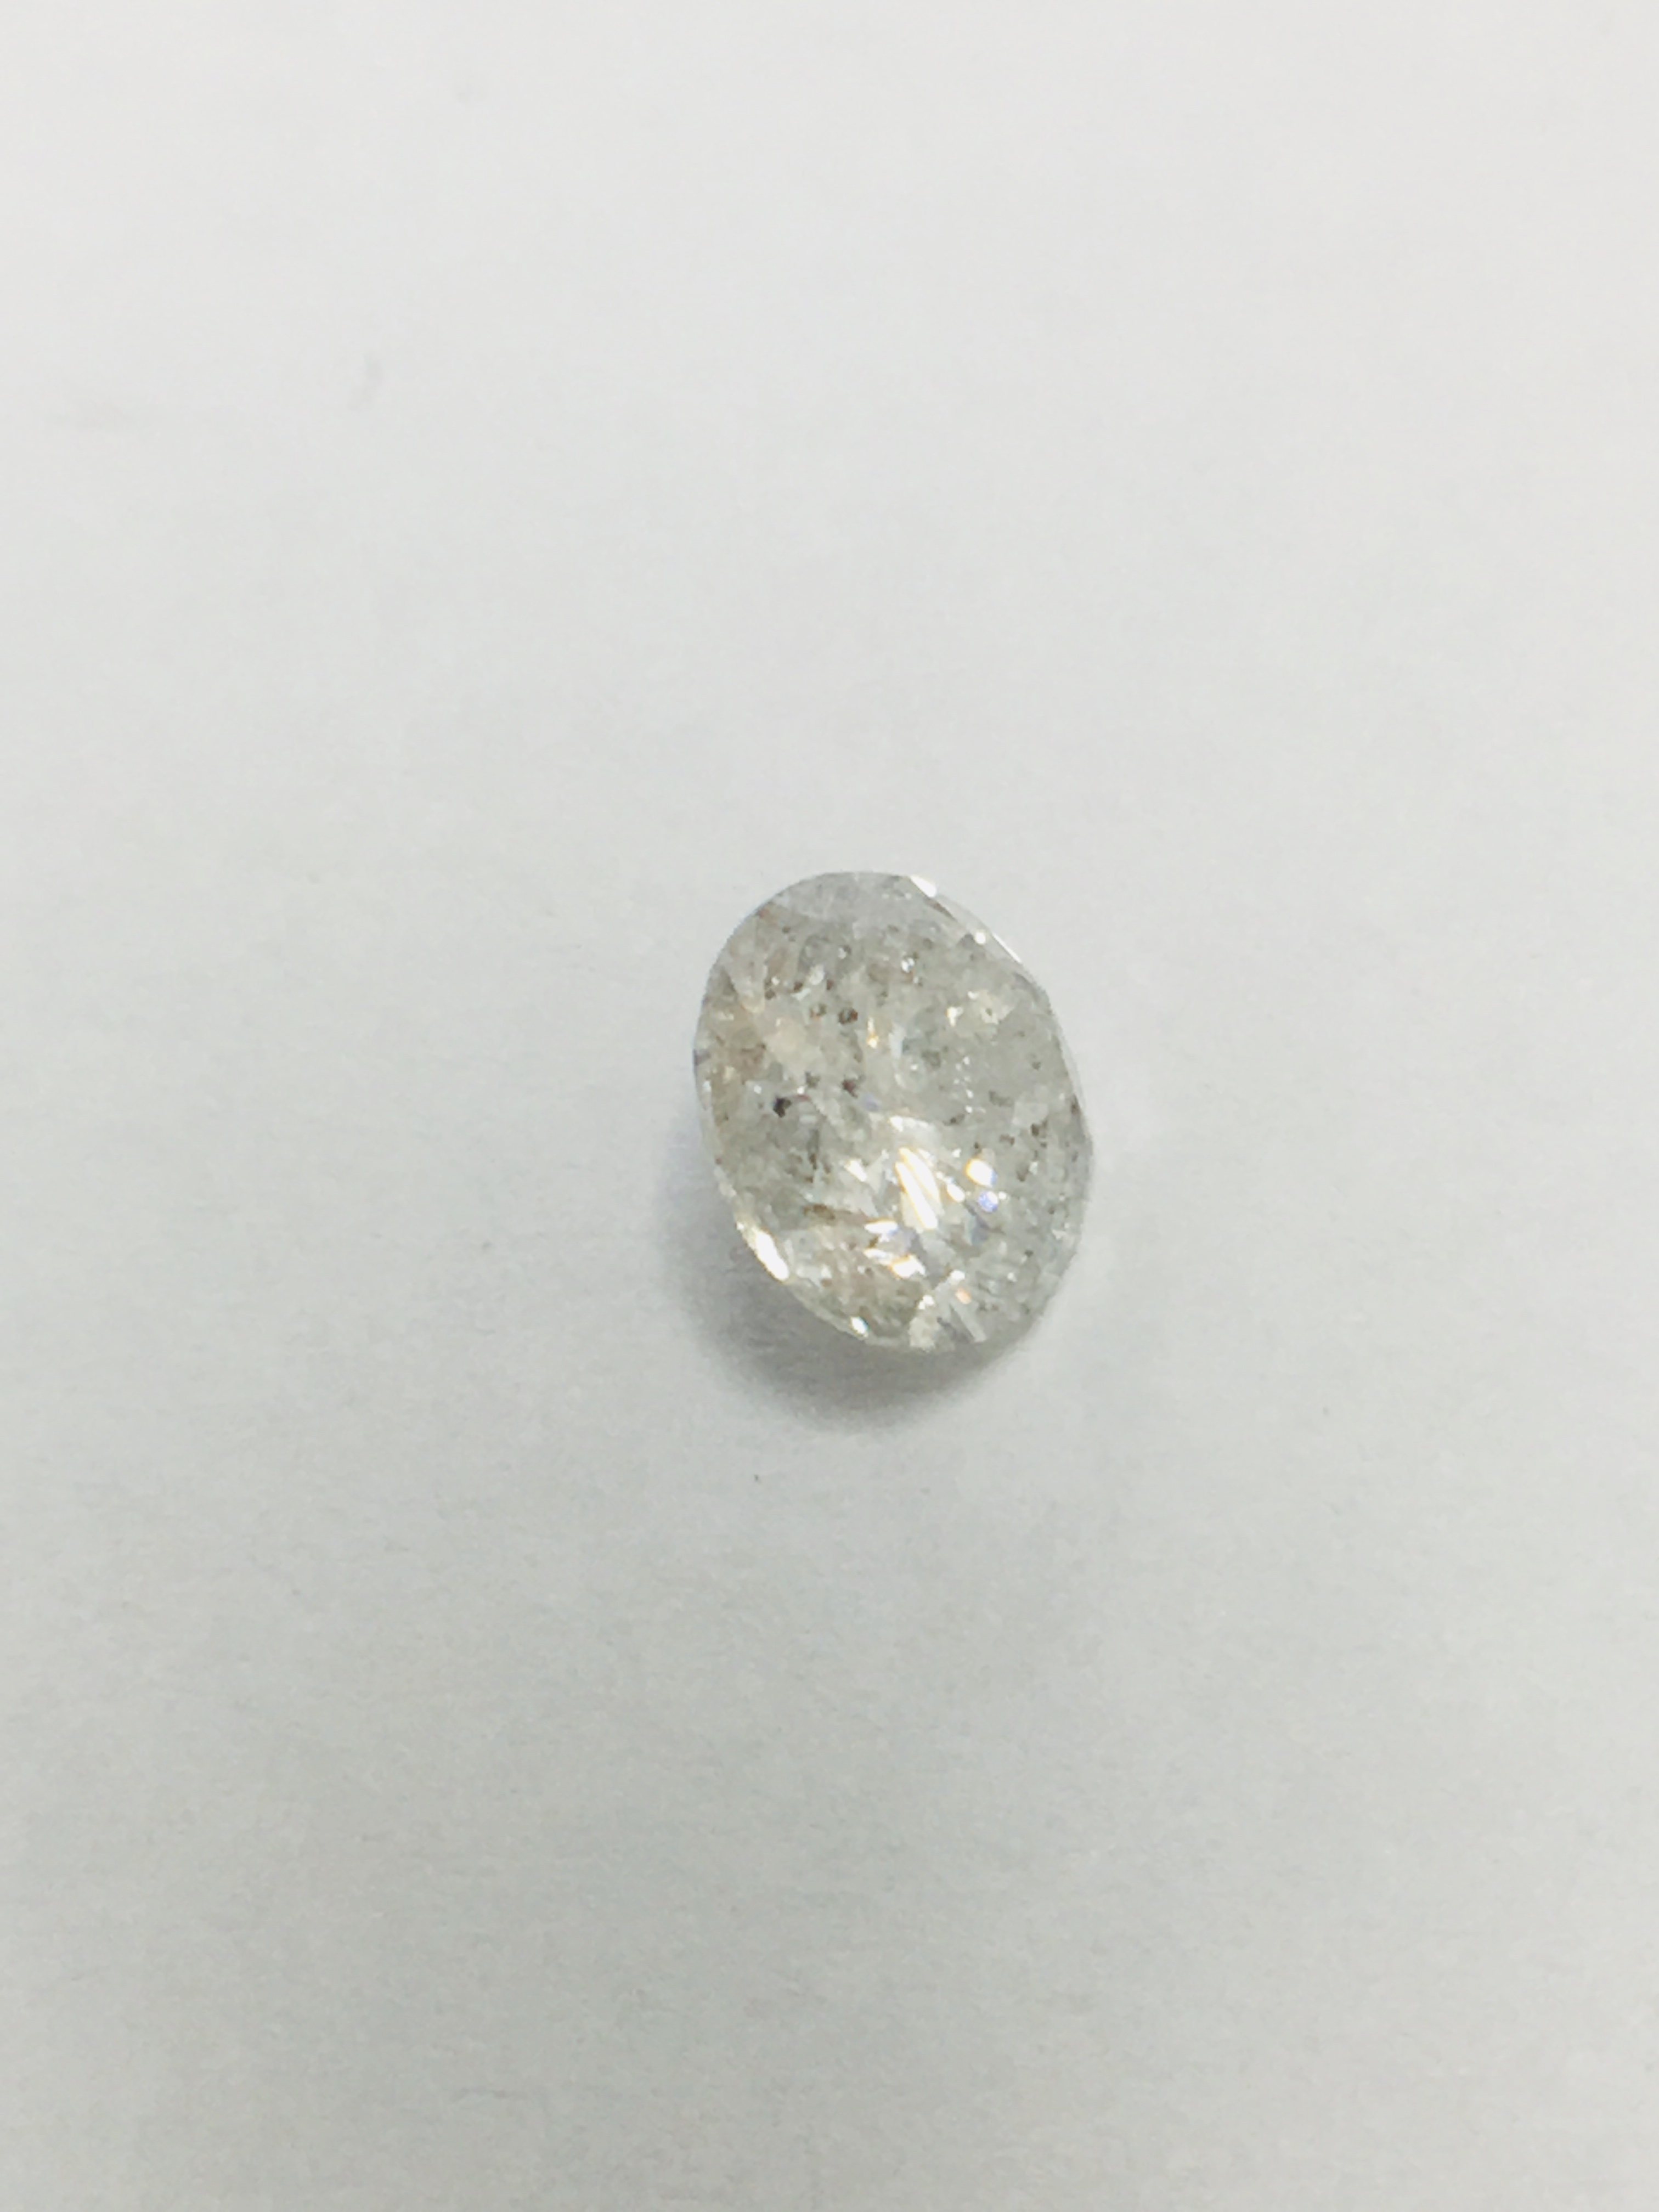 2.17ct Natural Brilliant cut Diamond,H colour,i2 clarity,no treatment - Image 4 of 4